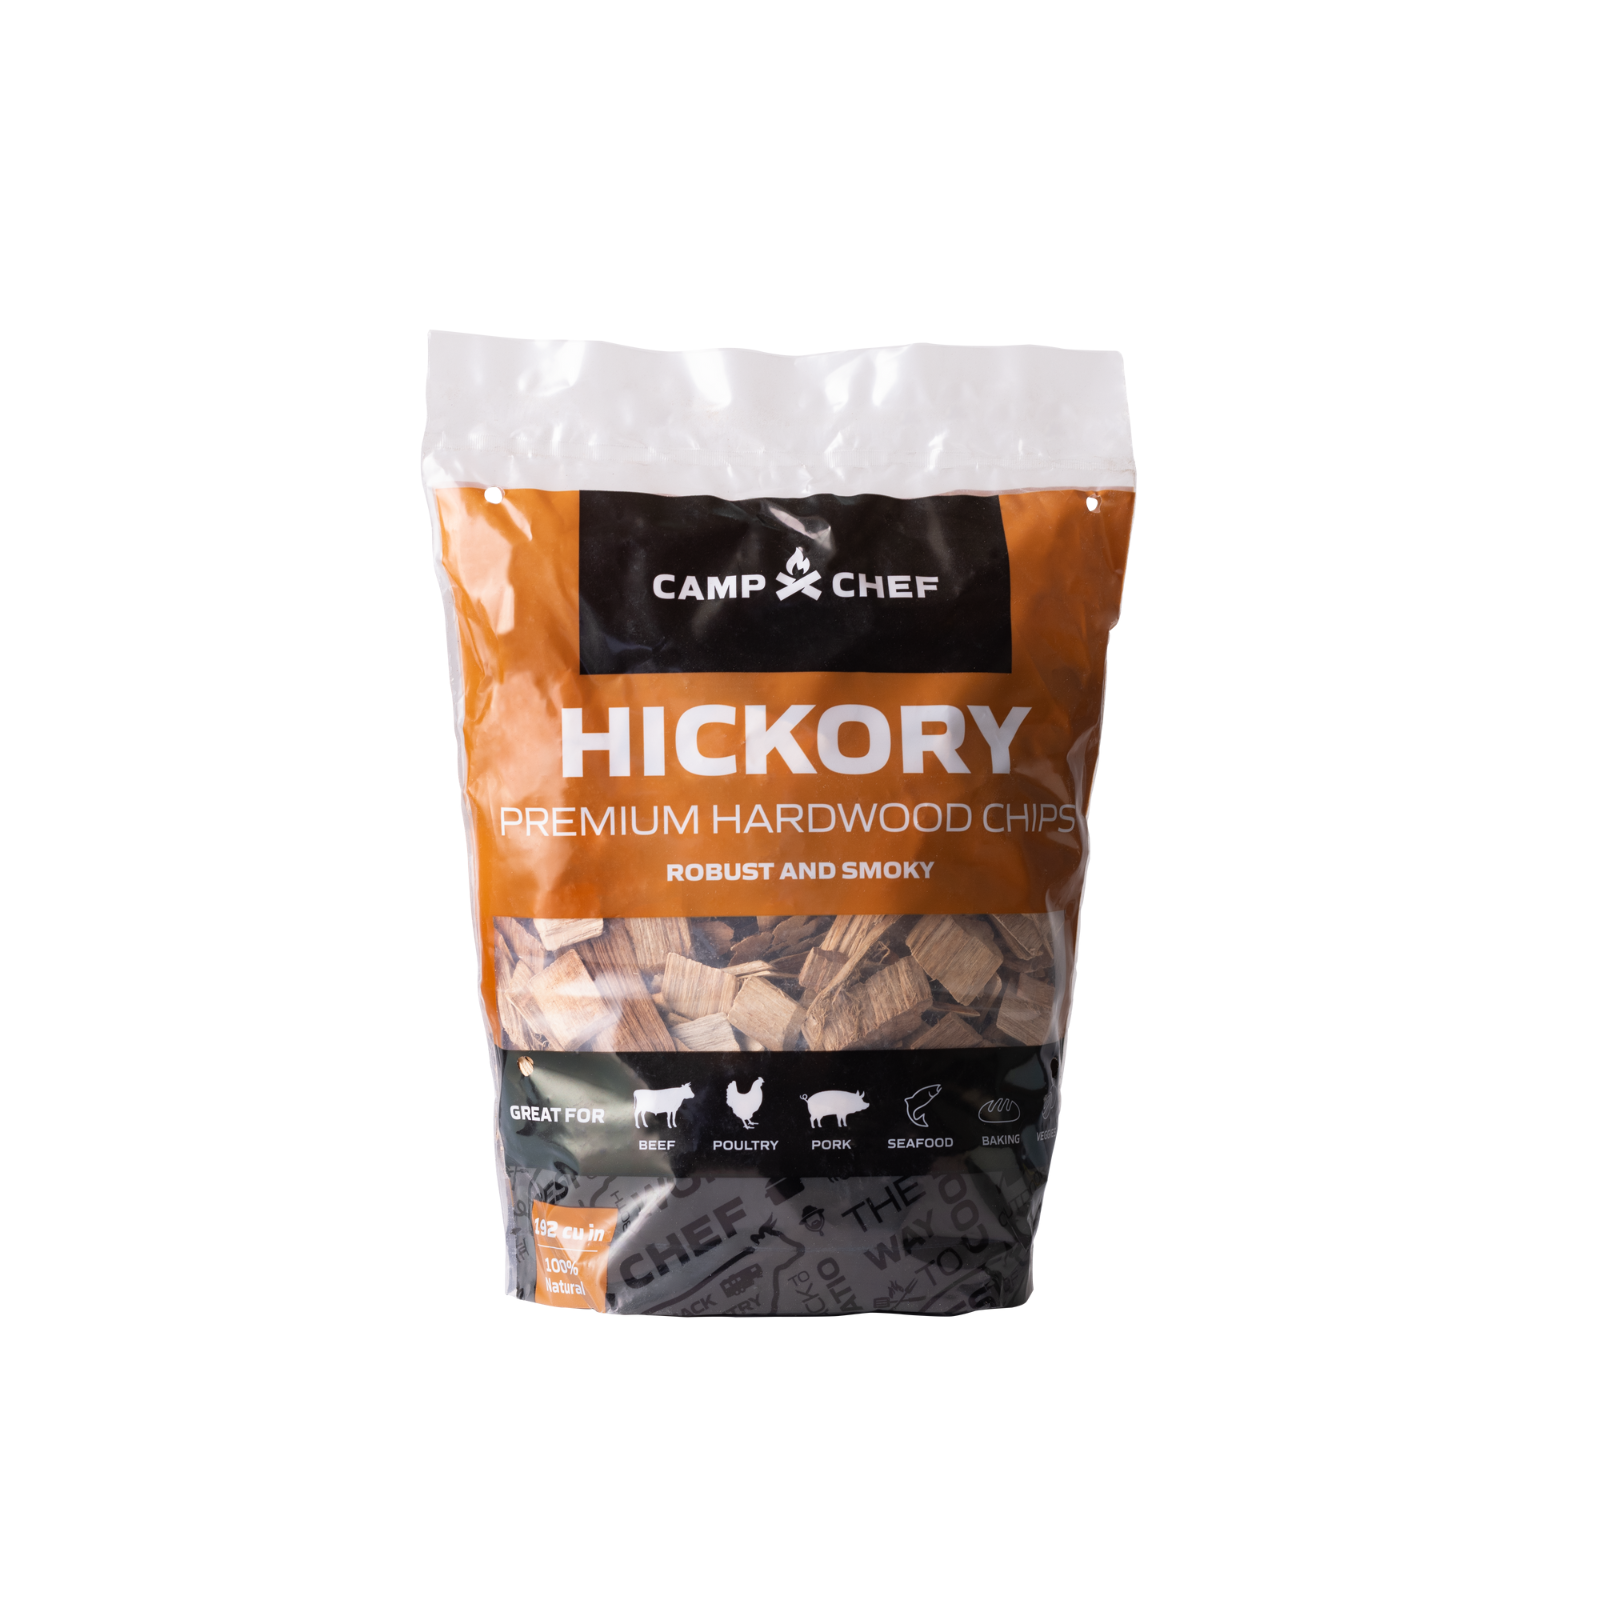 Camp Chef Hickory premium hardwood chips